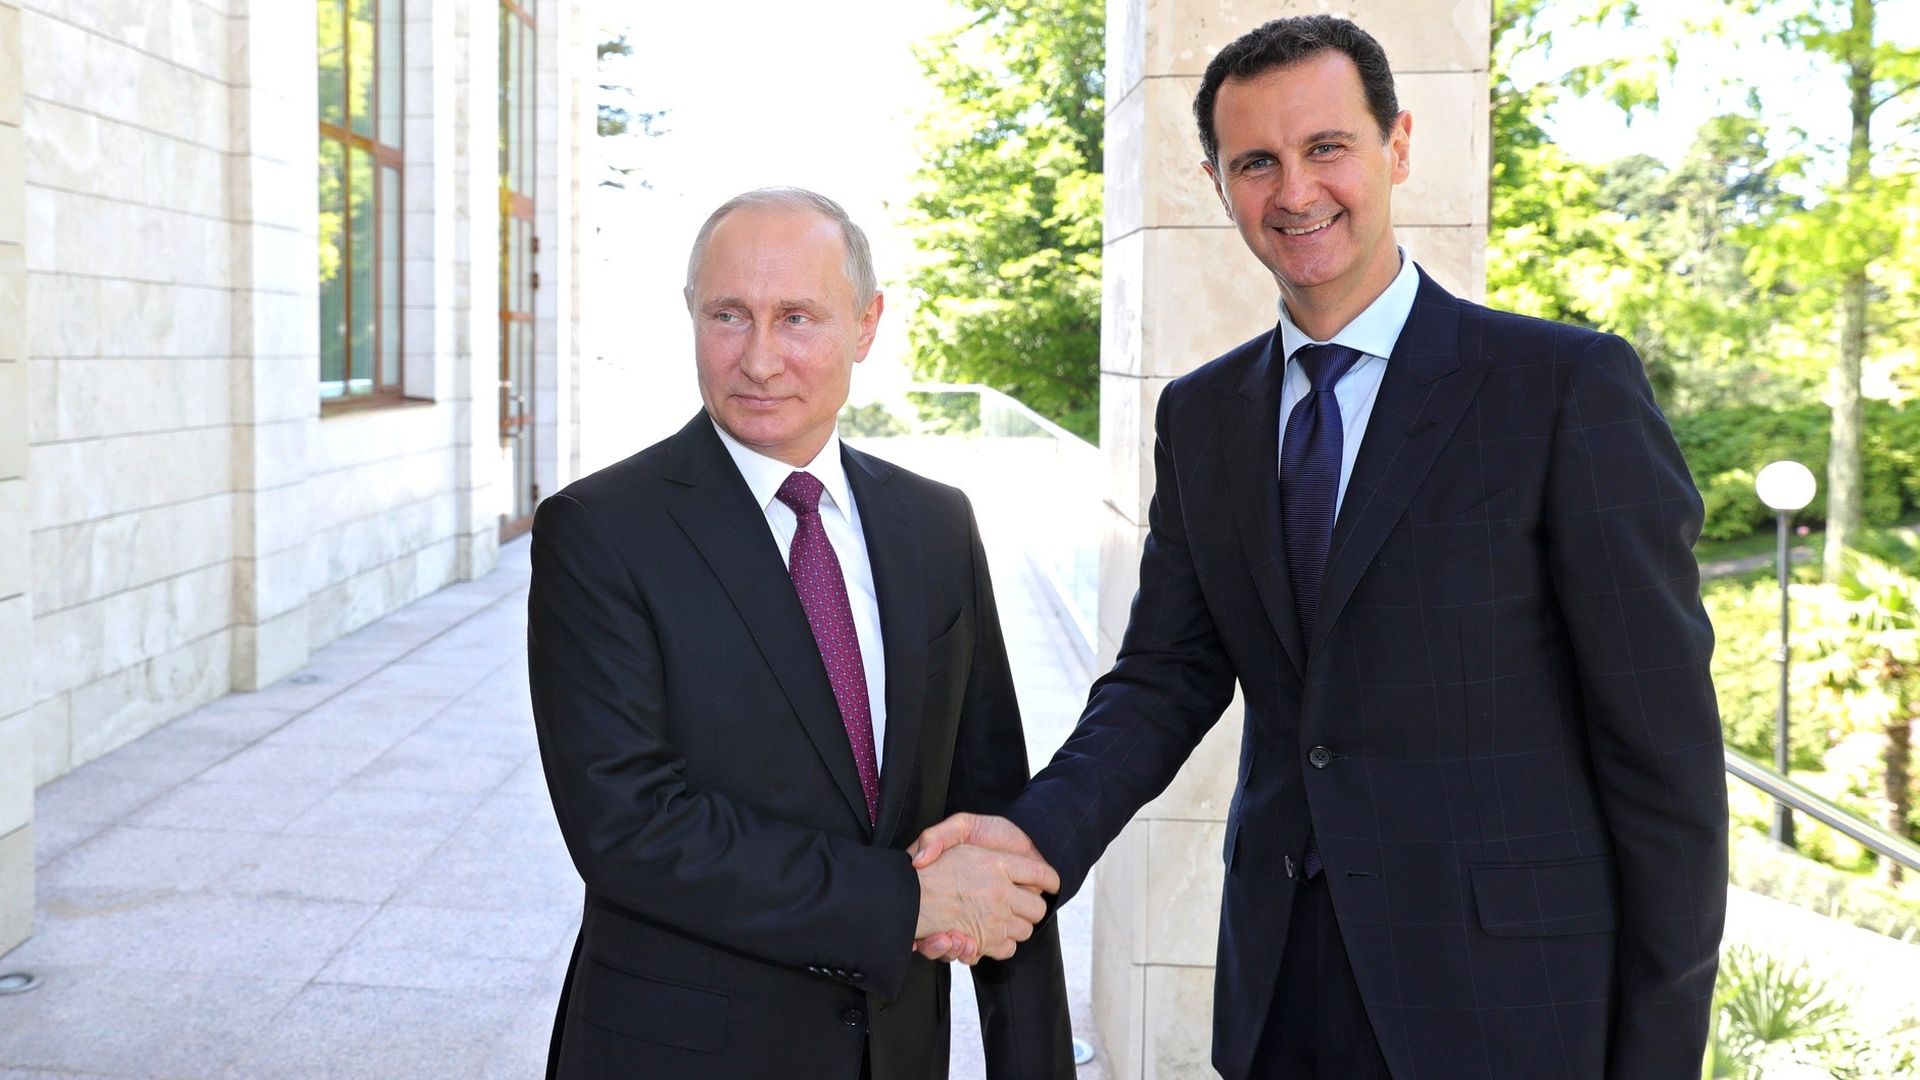 Vladimir Putin and Bashar al-Assad shaking hands and smiling